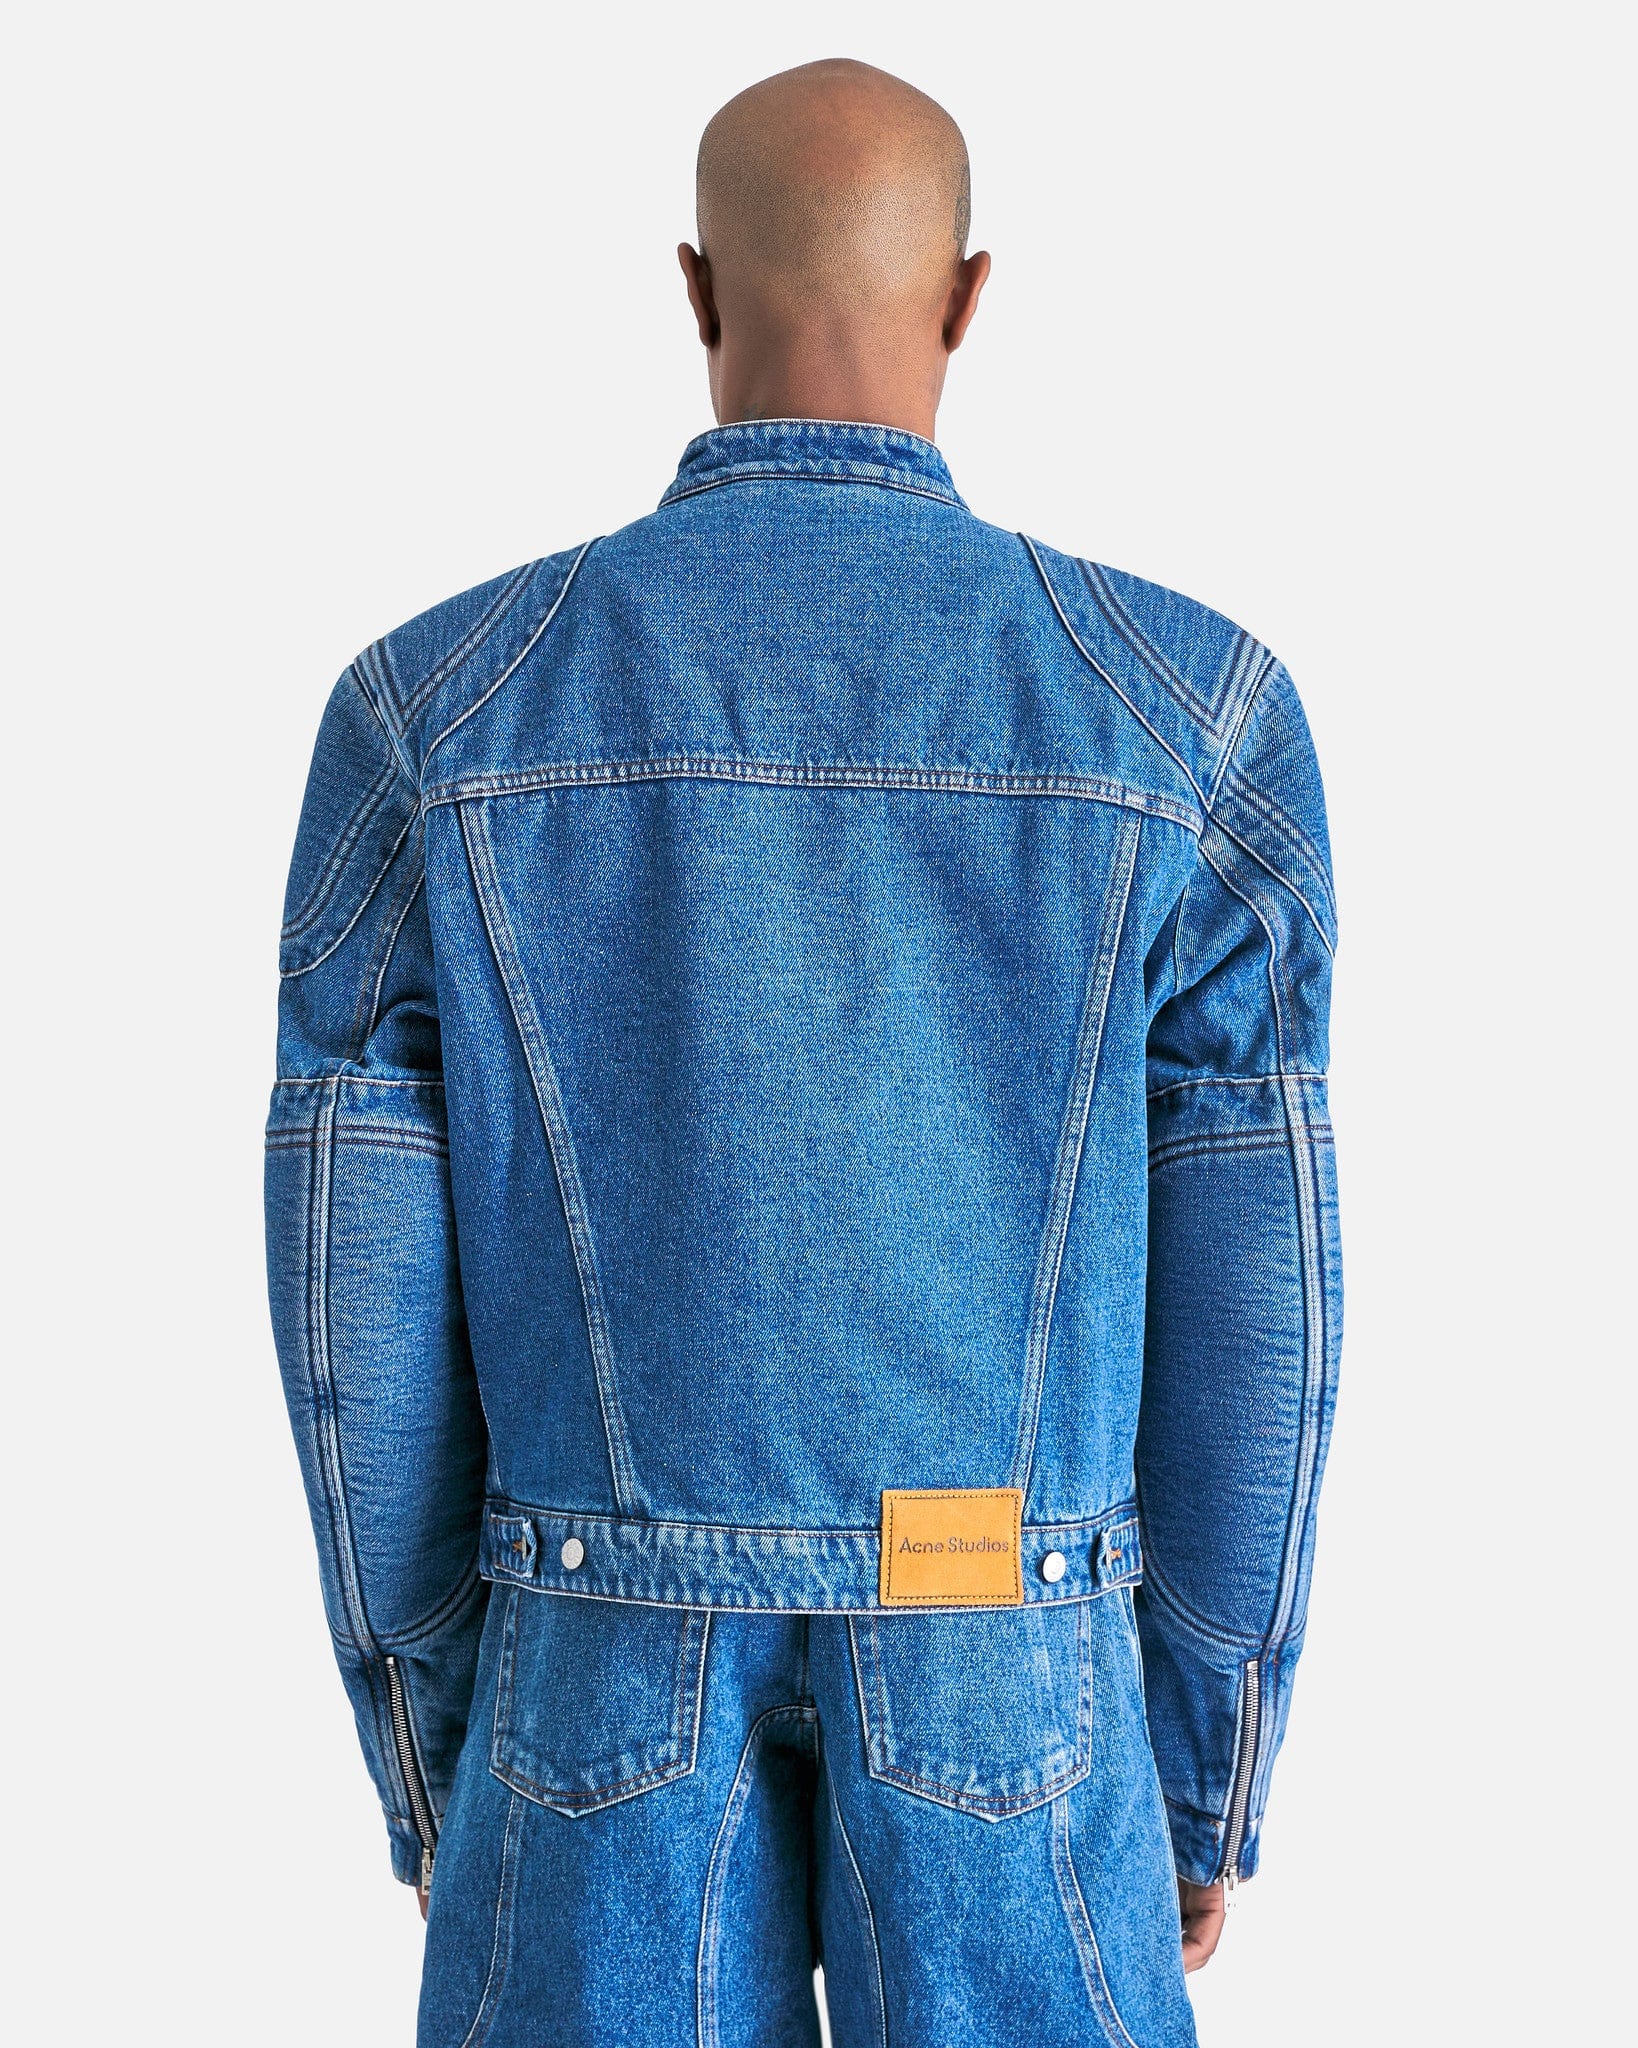 Acne Studios Men's Jackets Denim Jacket in Mid Blue